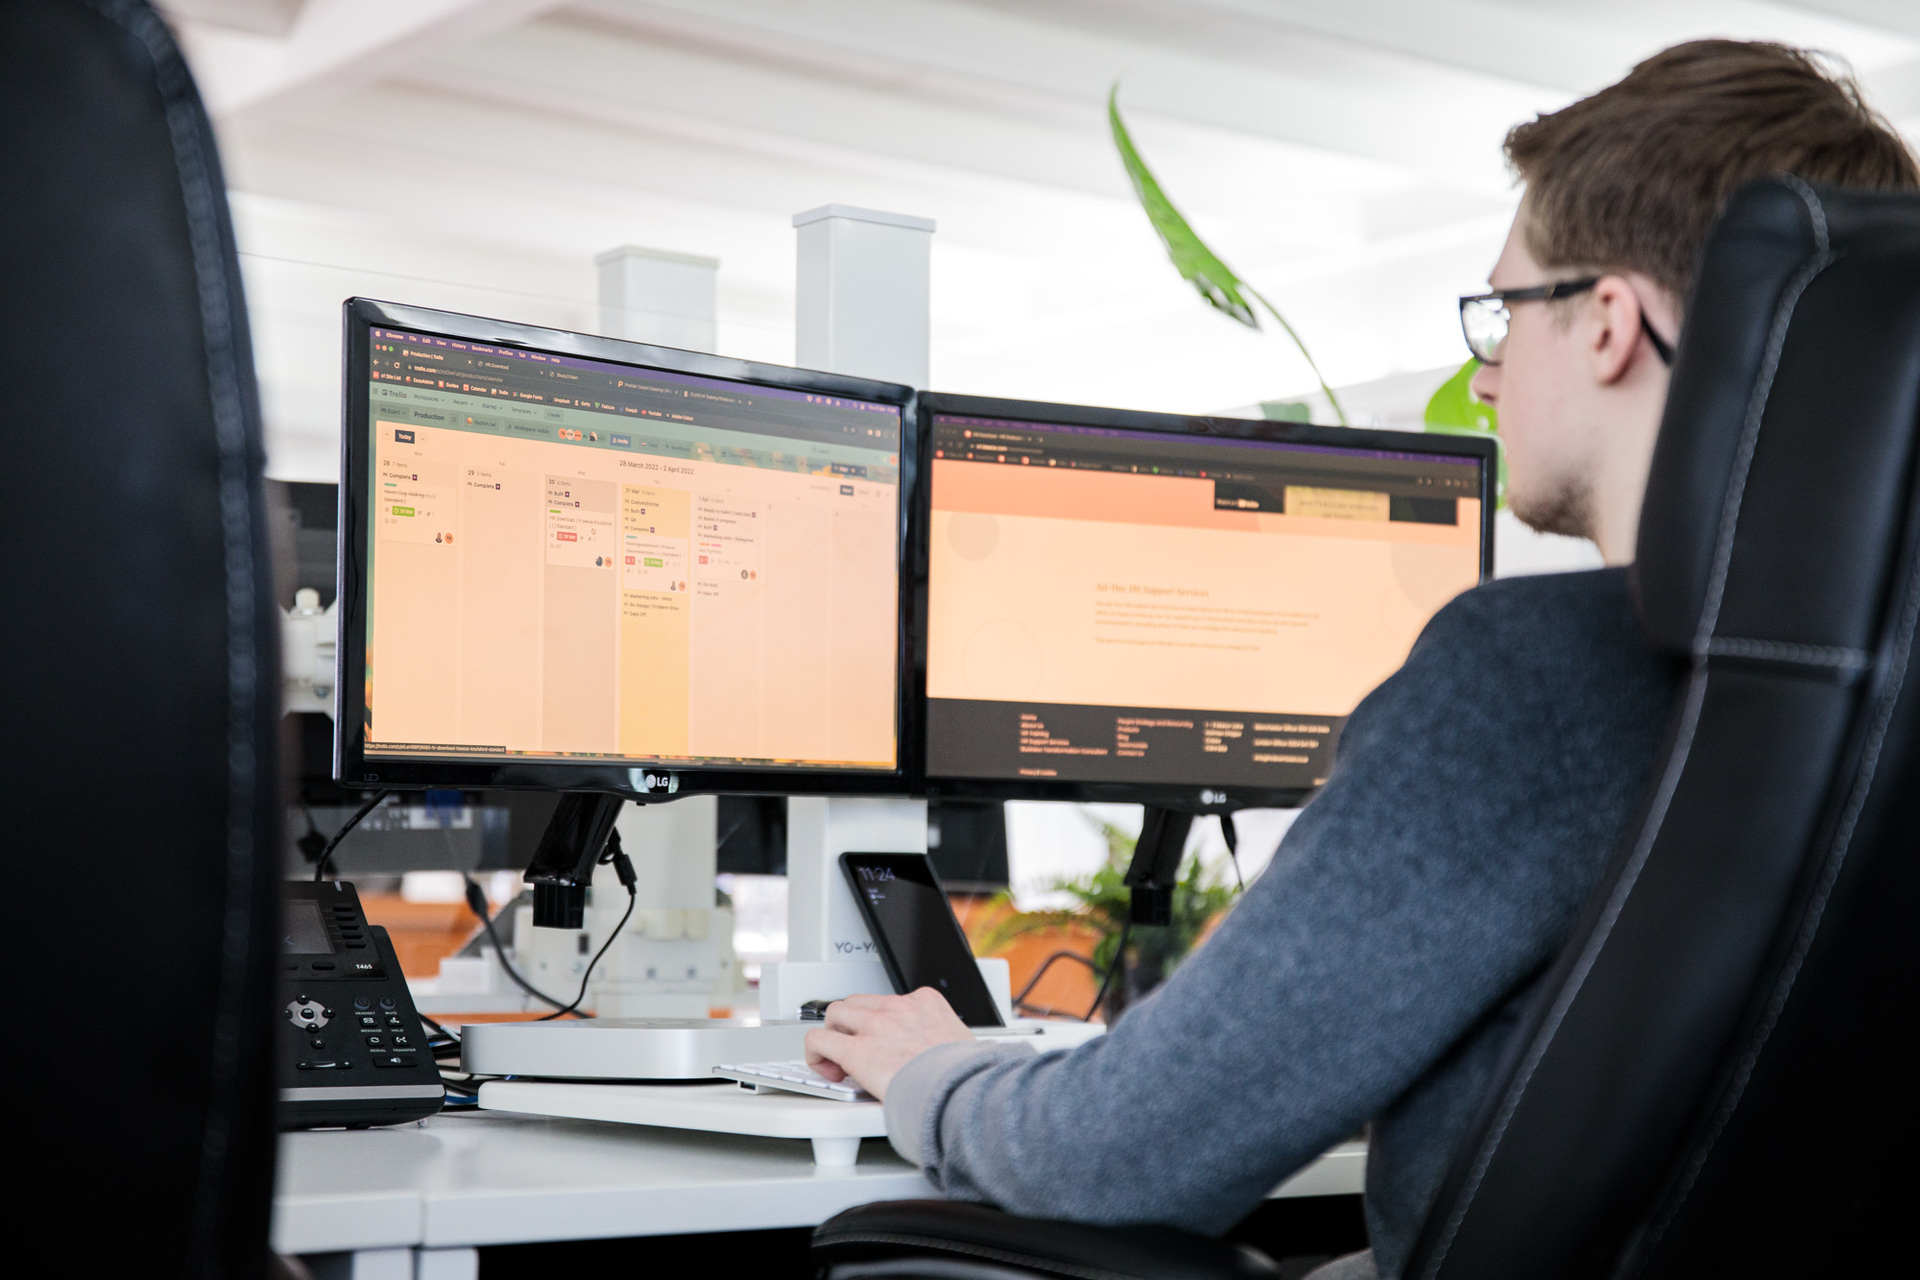 A website designer sat at his desk, looking at a computer